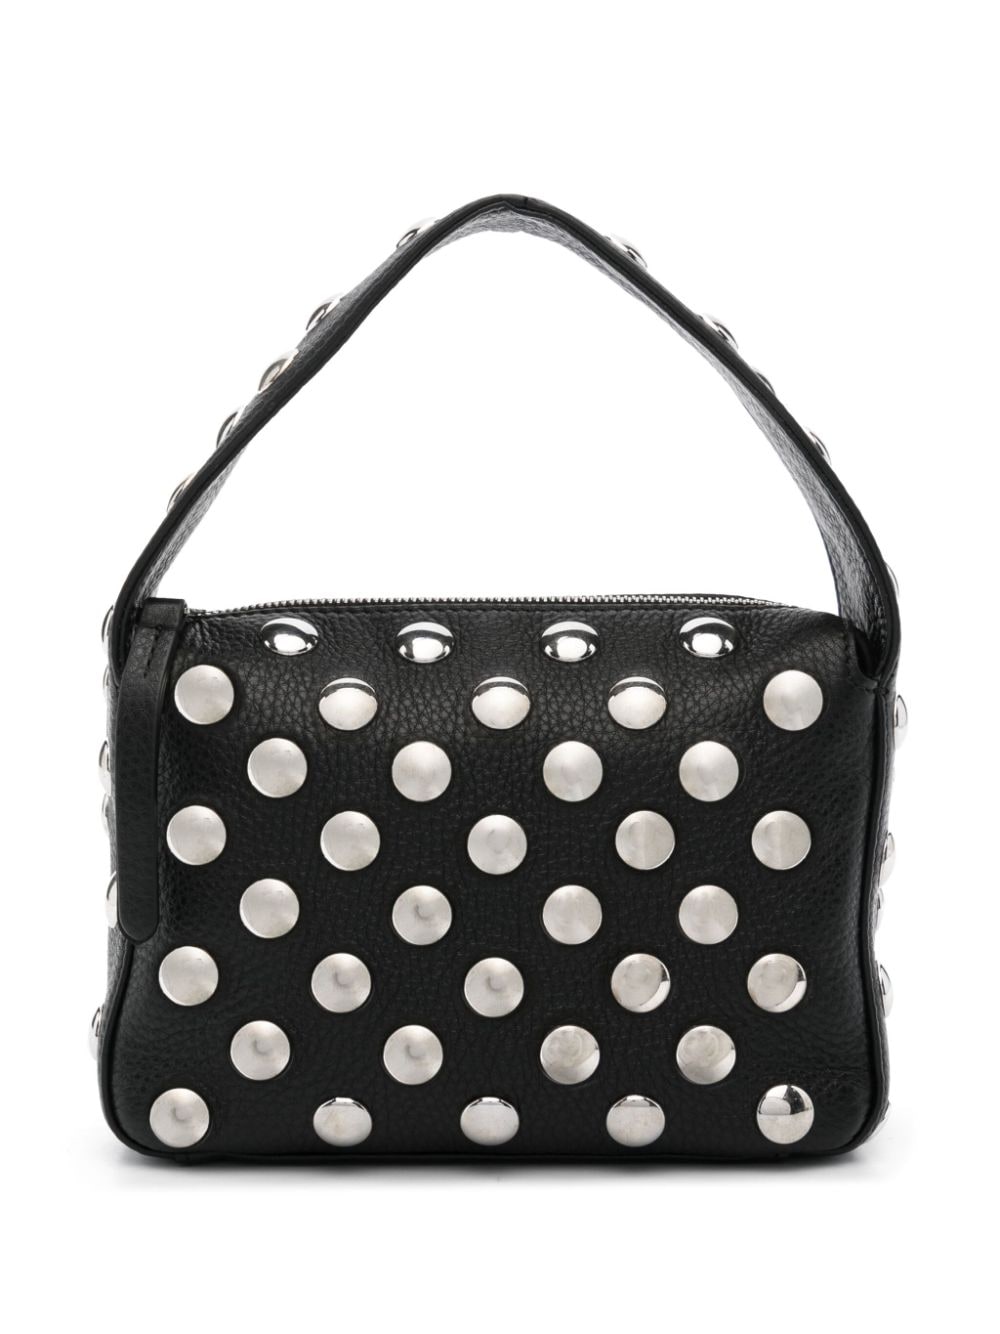 Khaite KHAITE- Elena Small Studded Leather Handbag